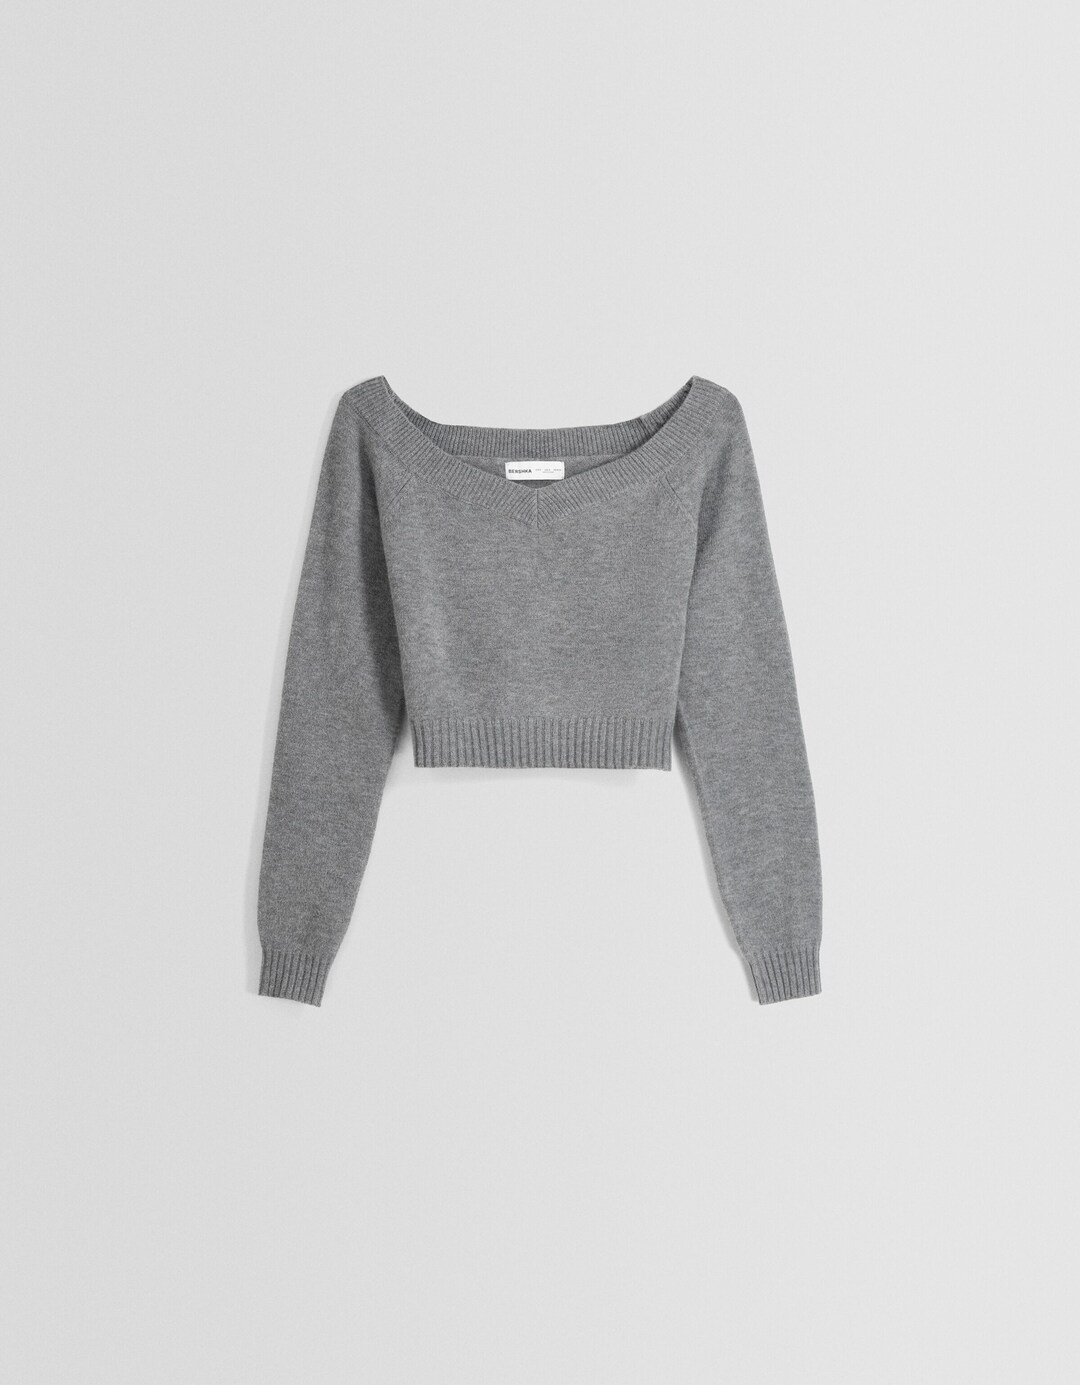 V-neck cropped sweater